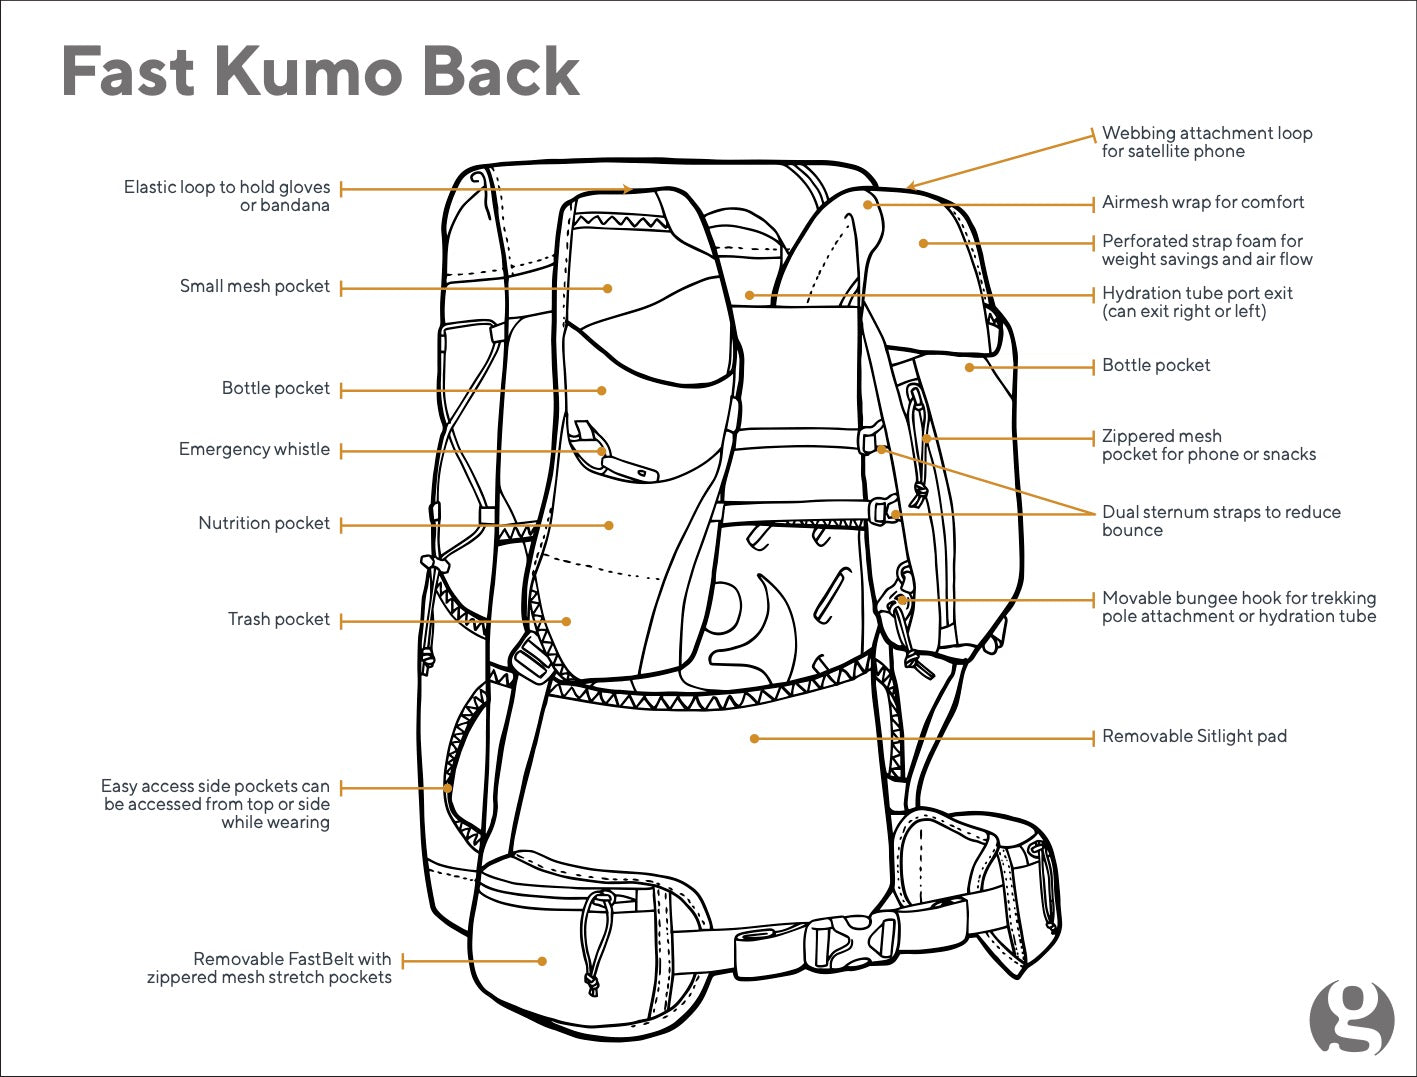 Fast Kumo 36 Fastpack